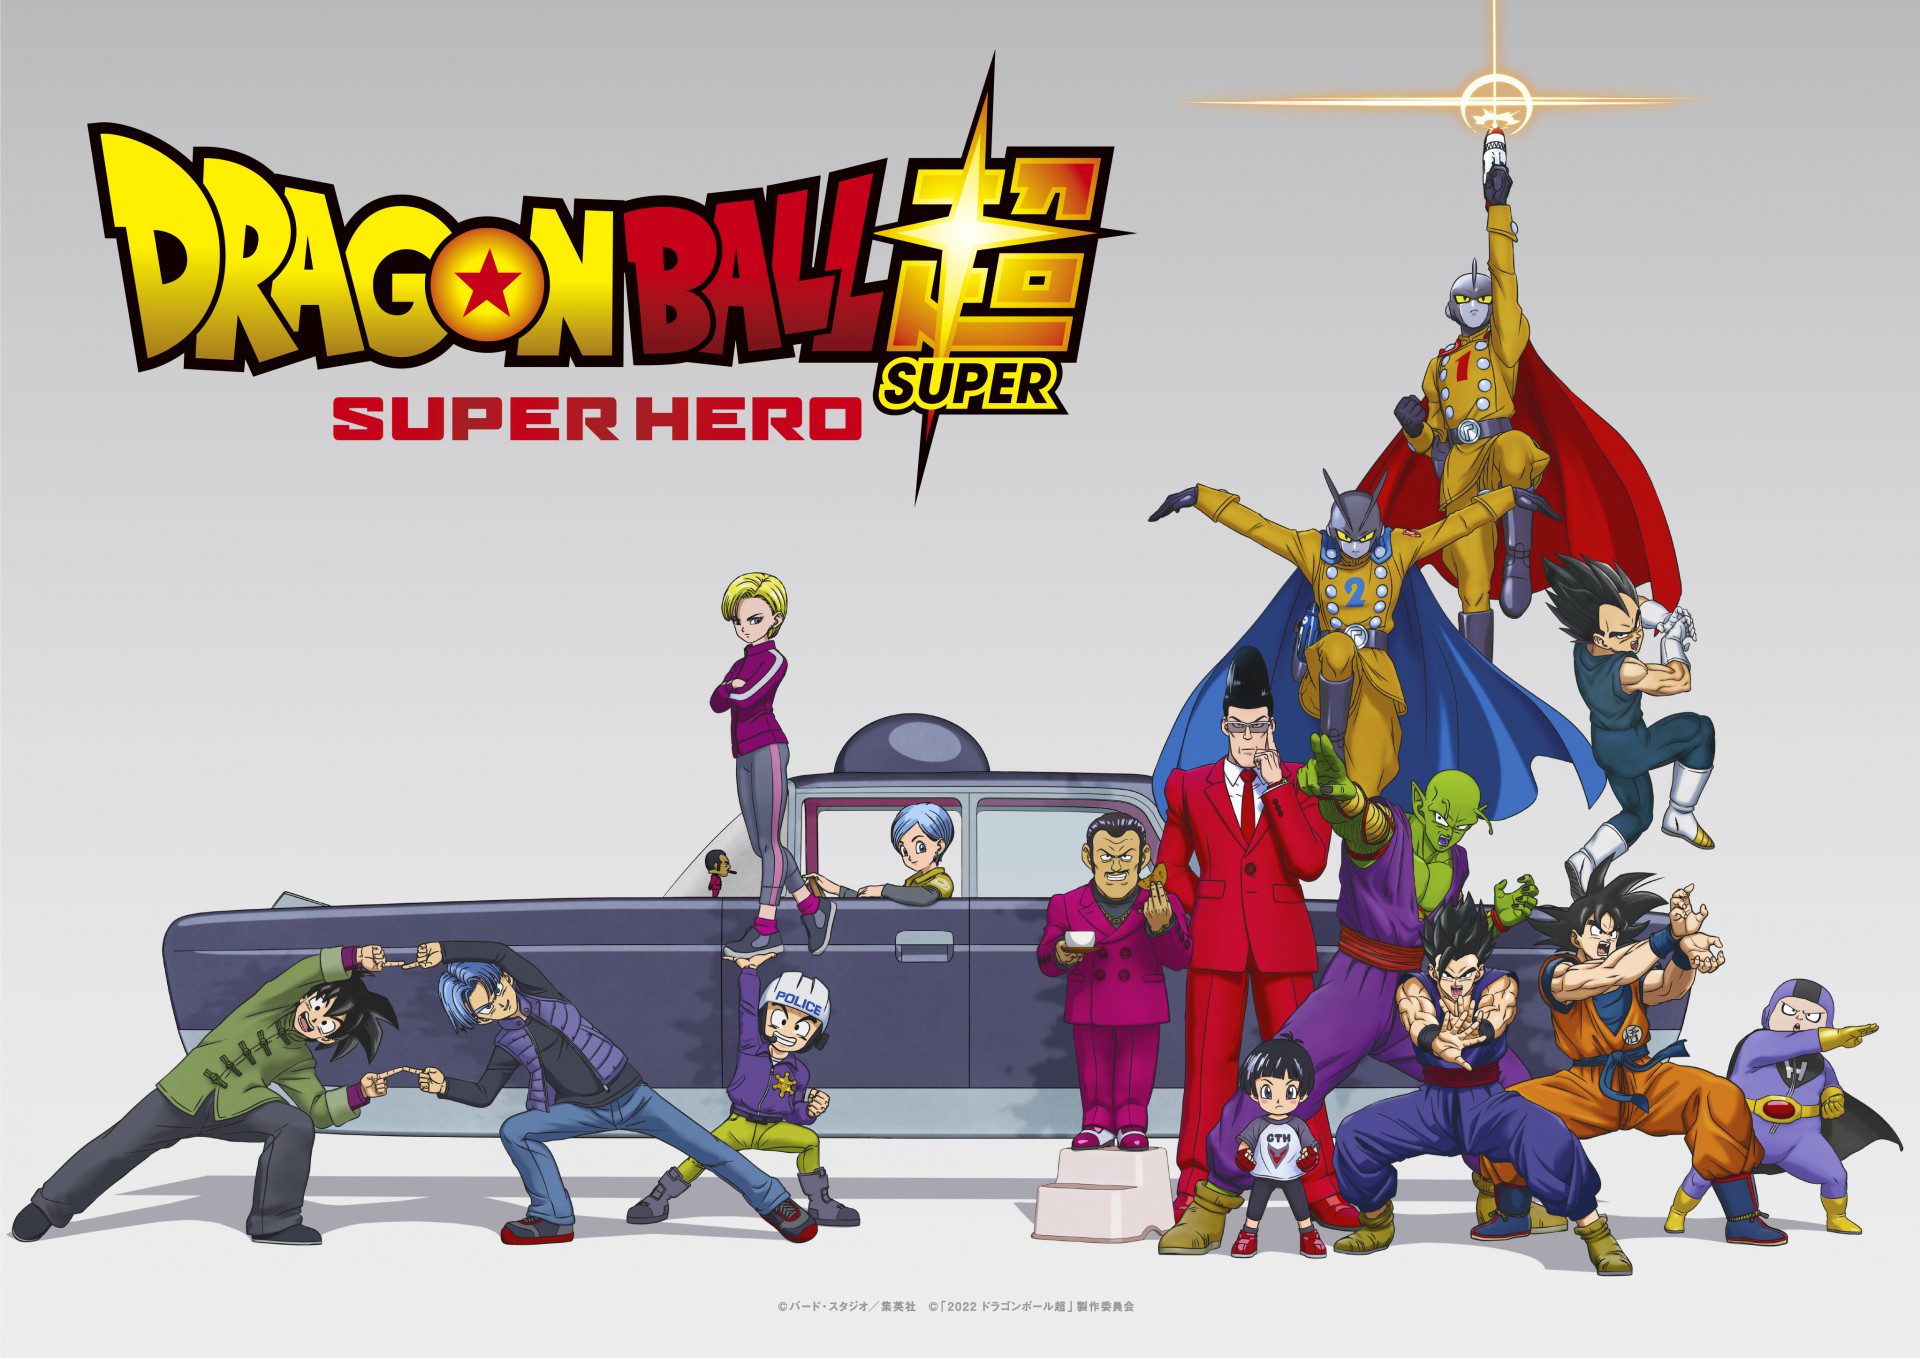 Dragon Ball Super: Super Hero 1st key visual featuring Teen Goten and Trunks